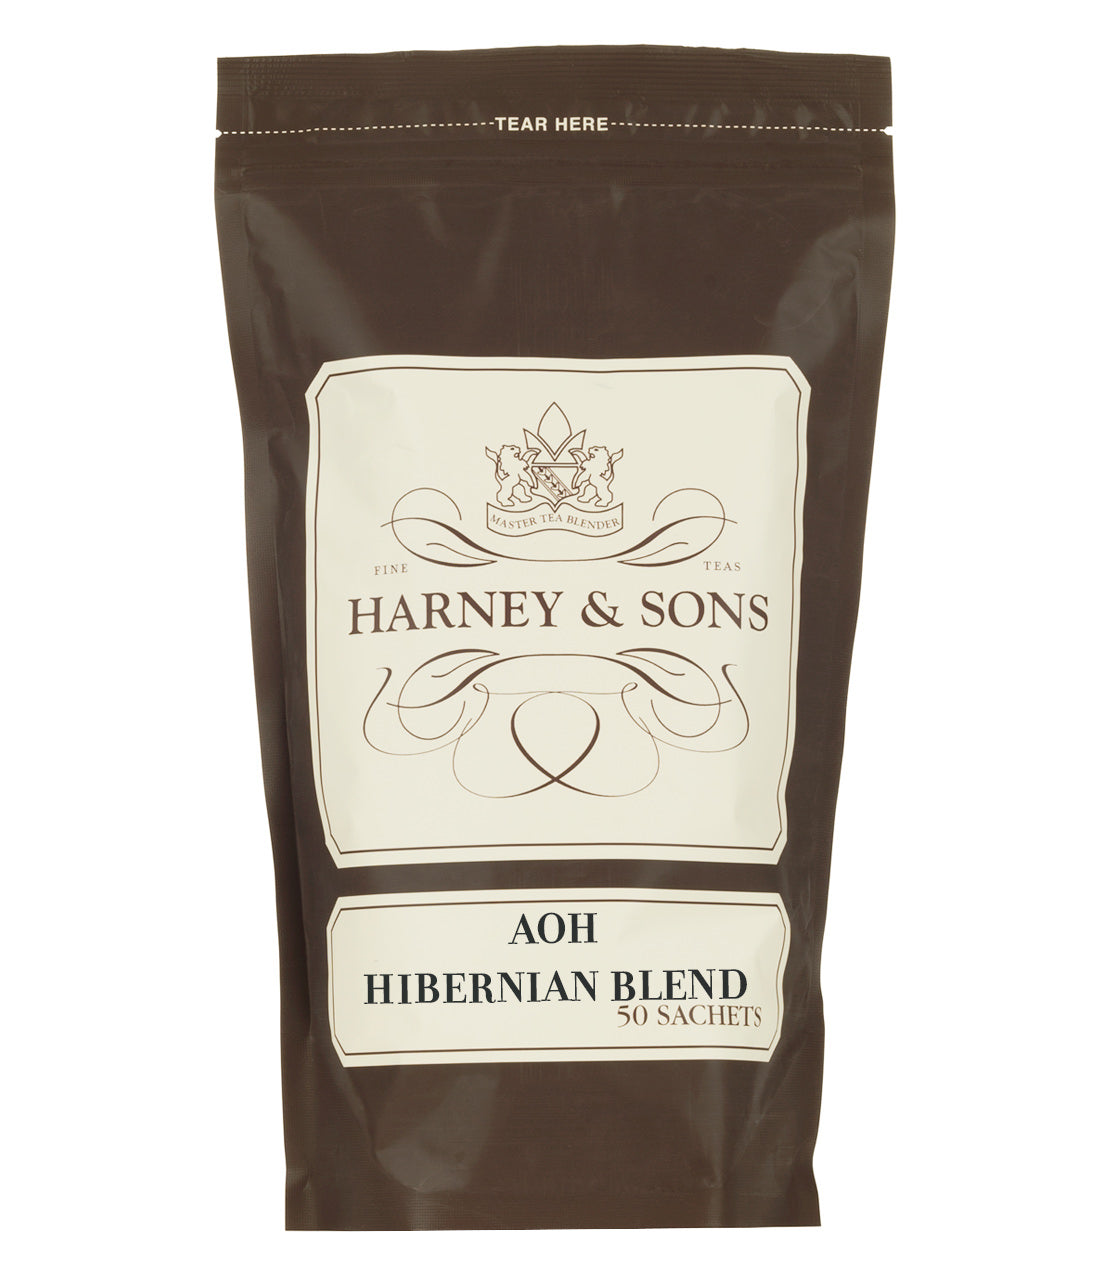 AOH Hibernian Blend, Bag of 50 Sachets - Sachets Bag of 50 Sachets - Harney & Sons Fine Teas